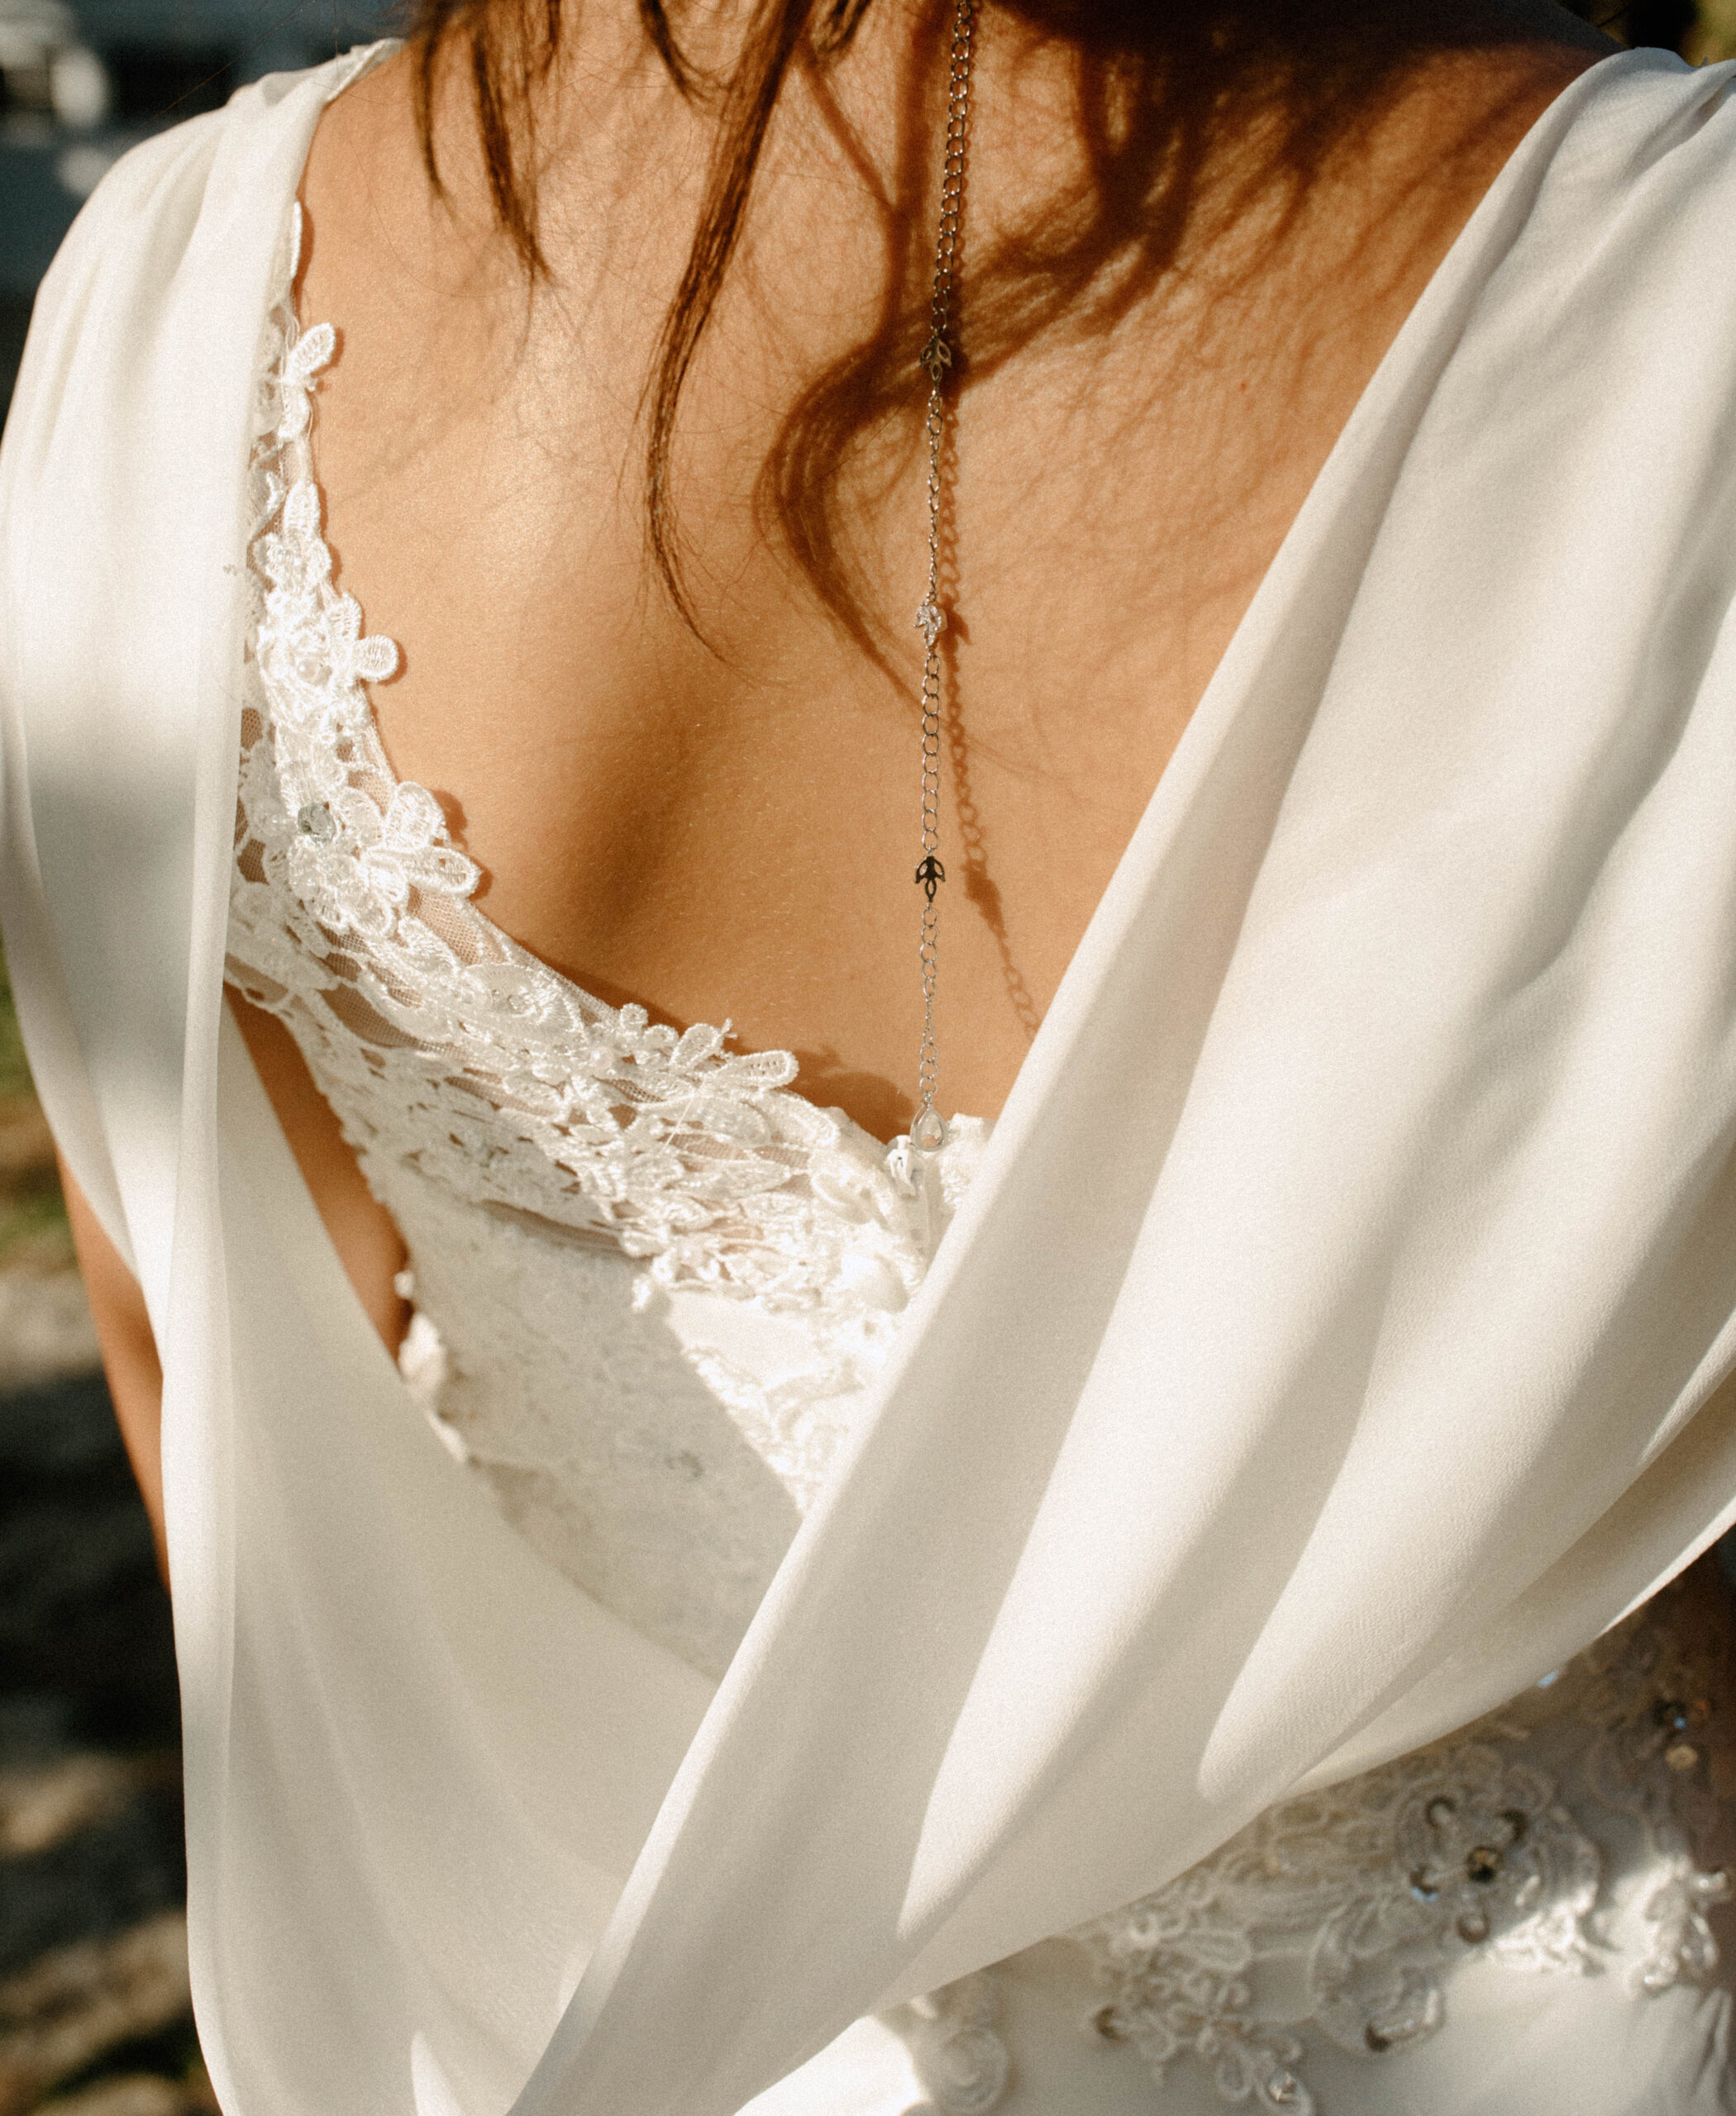 wedding necklace detail photograph 